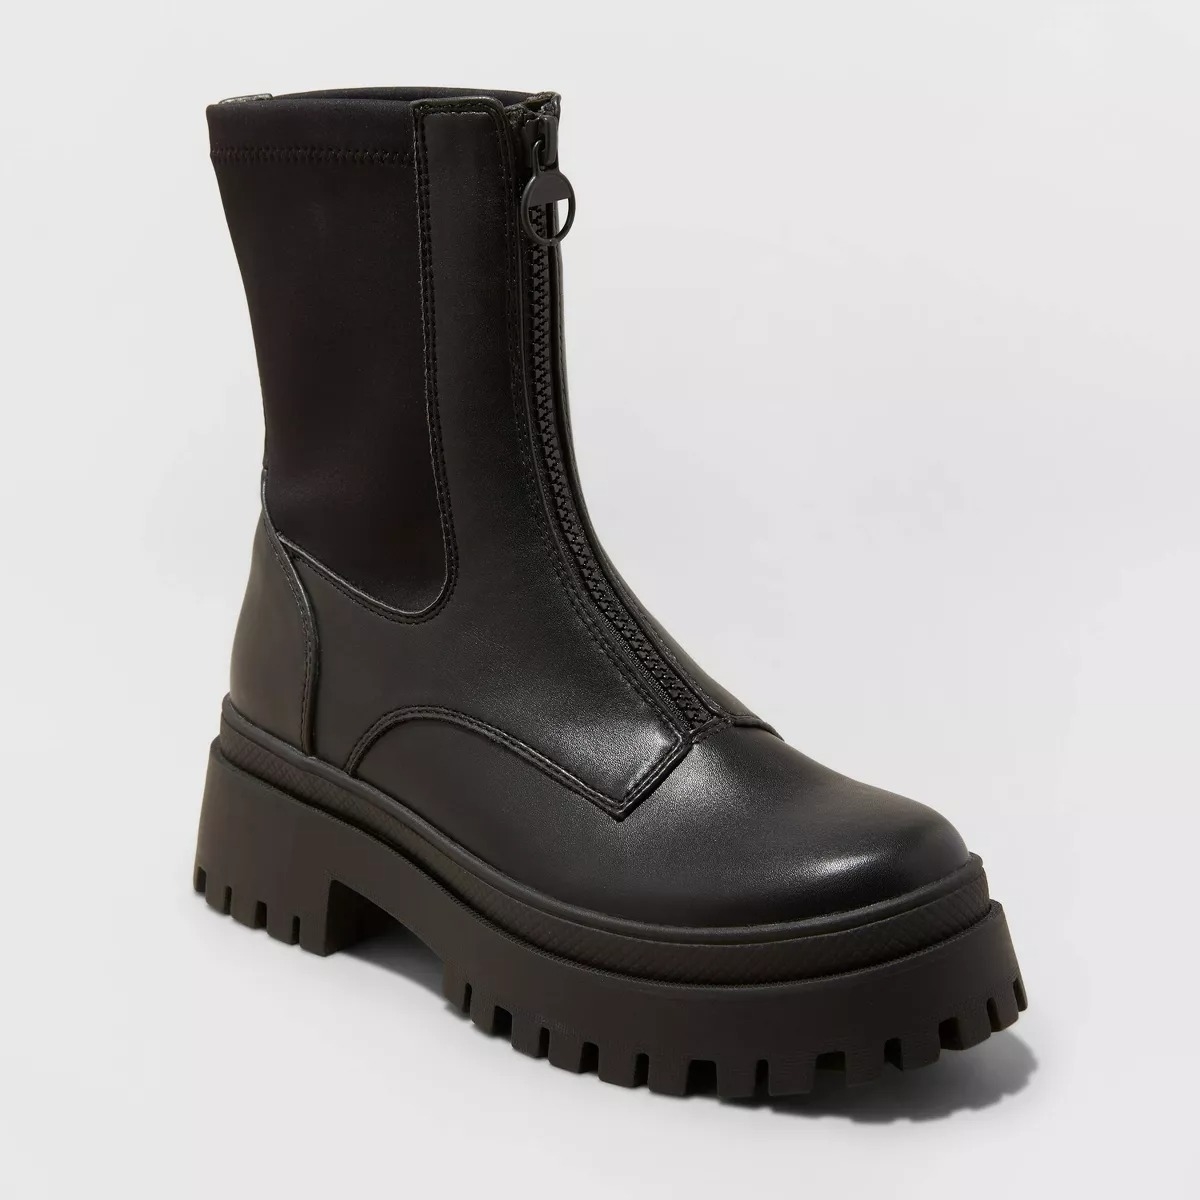 black platform boots with front zipper